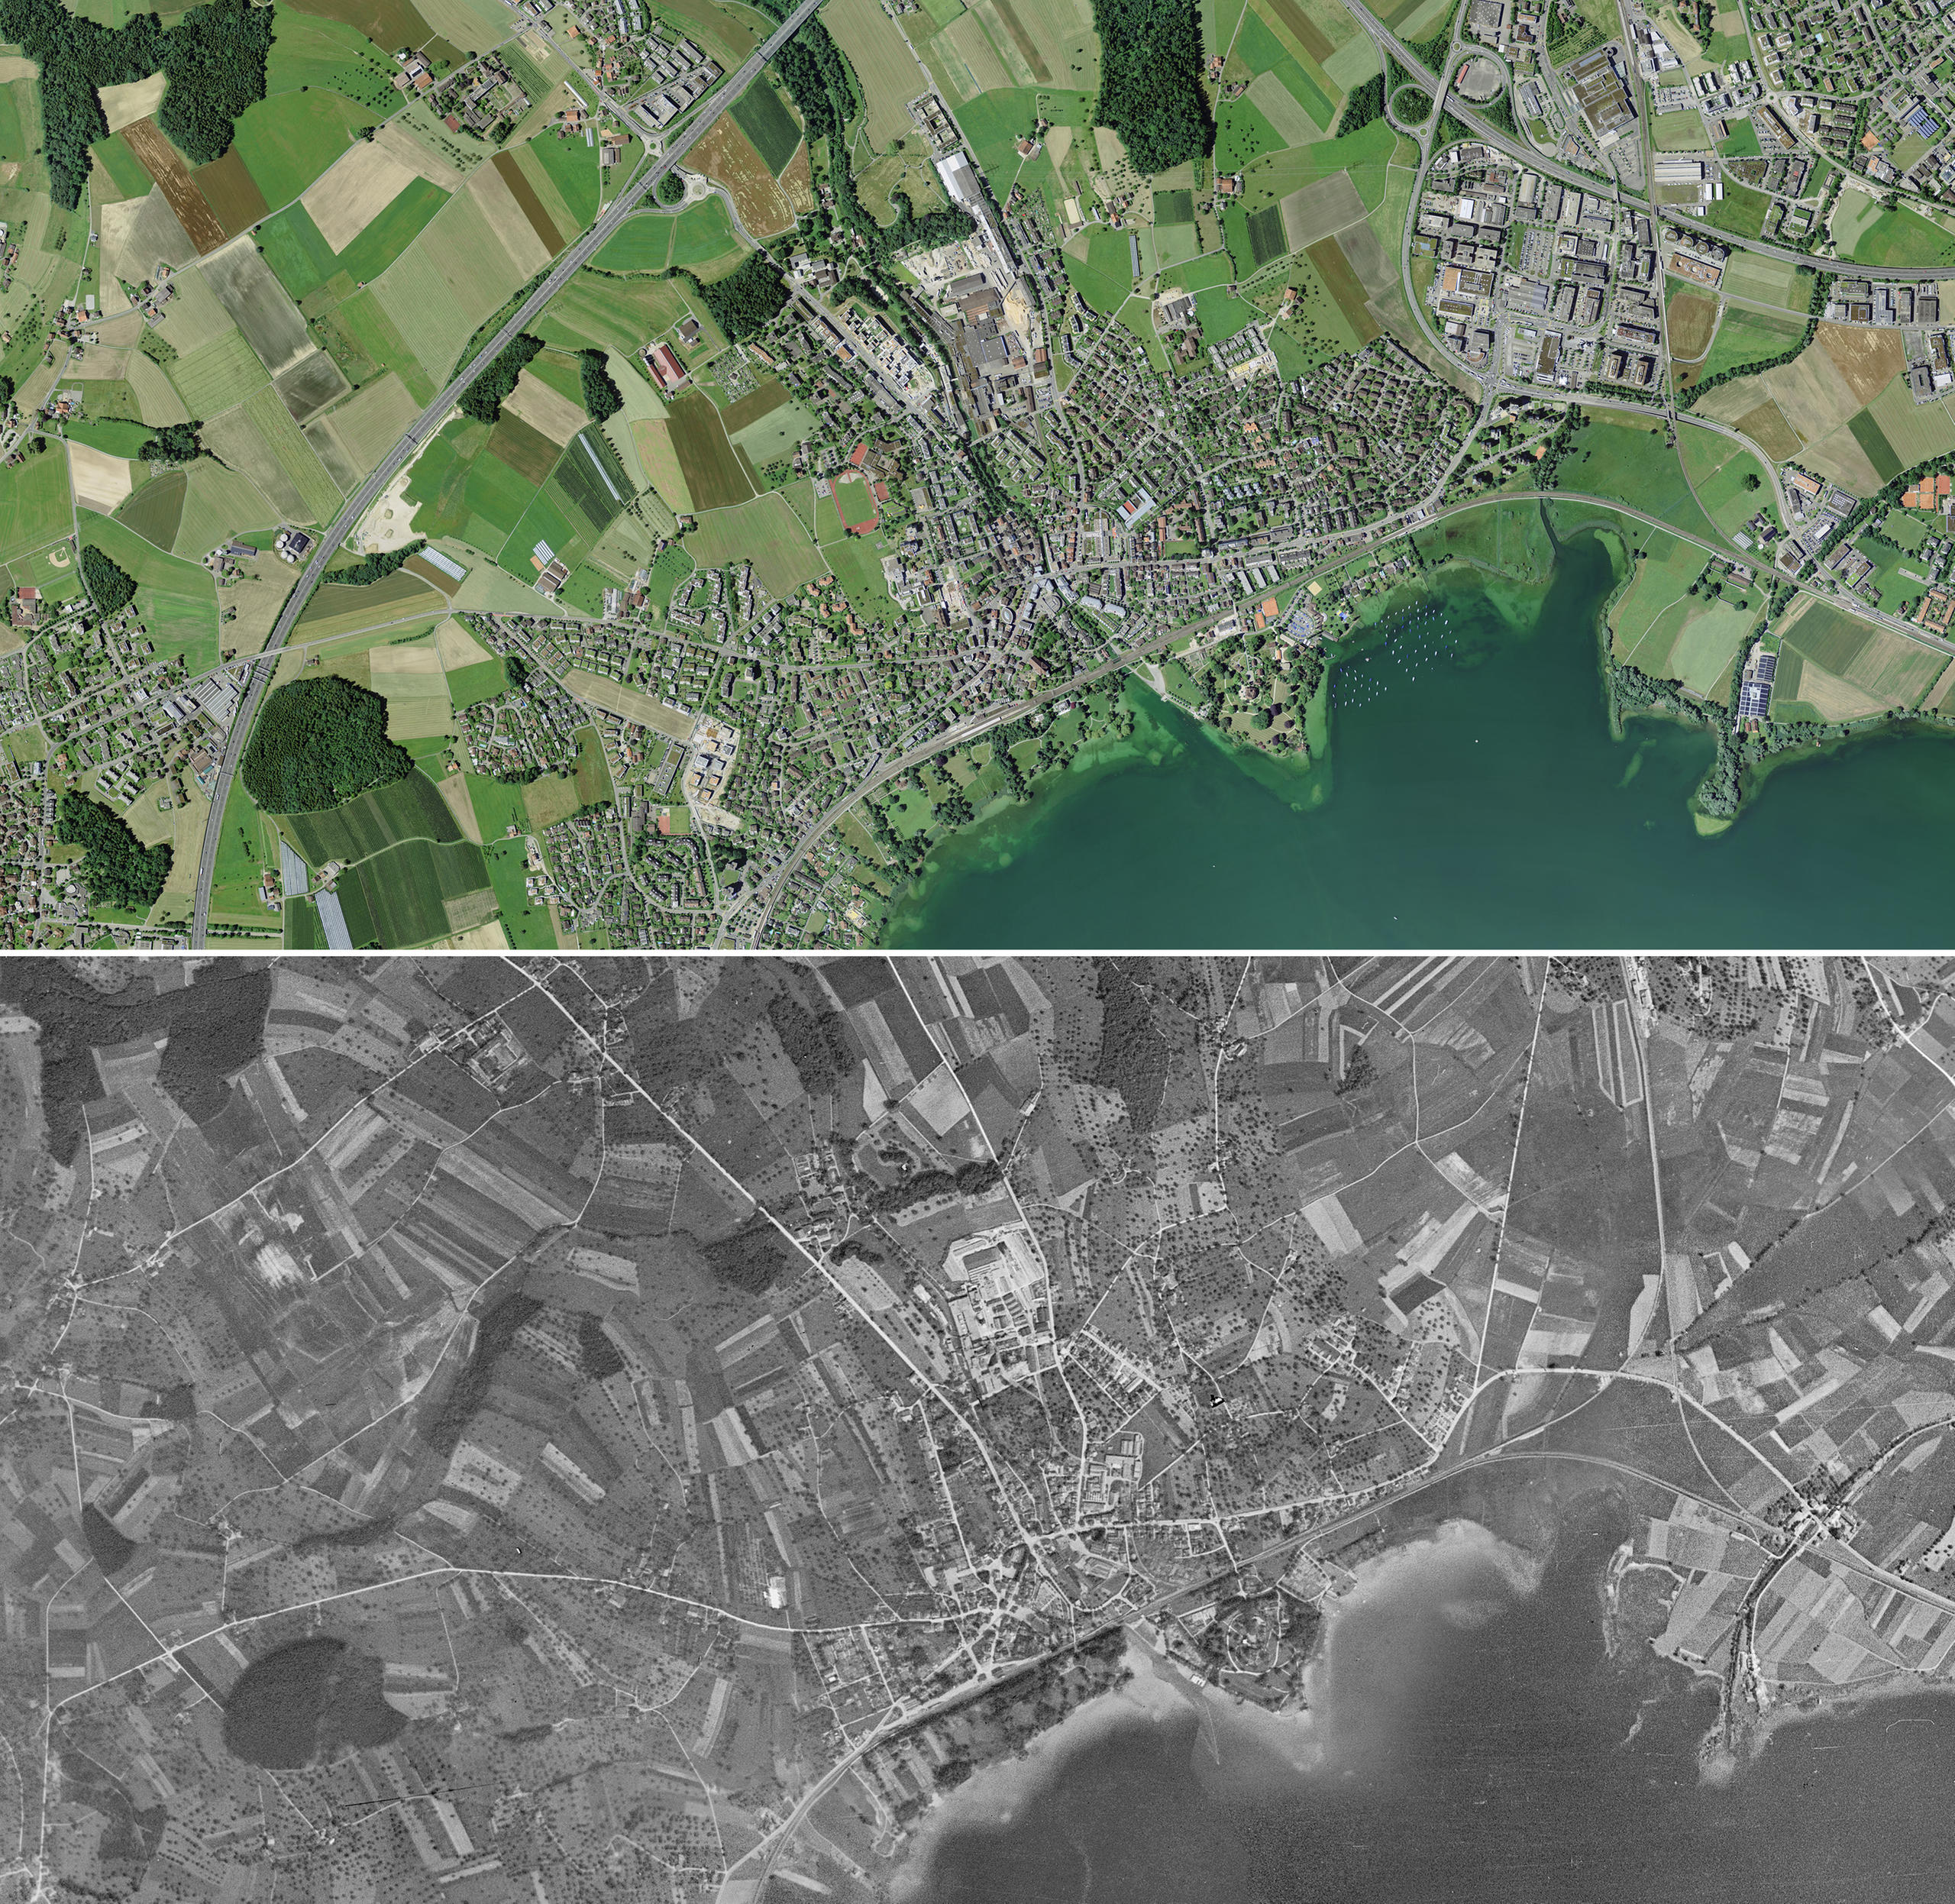 Aerial view of Birsfelden above in 2018 and below in 1946